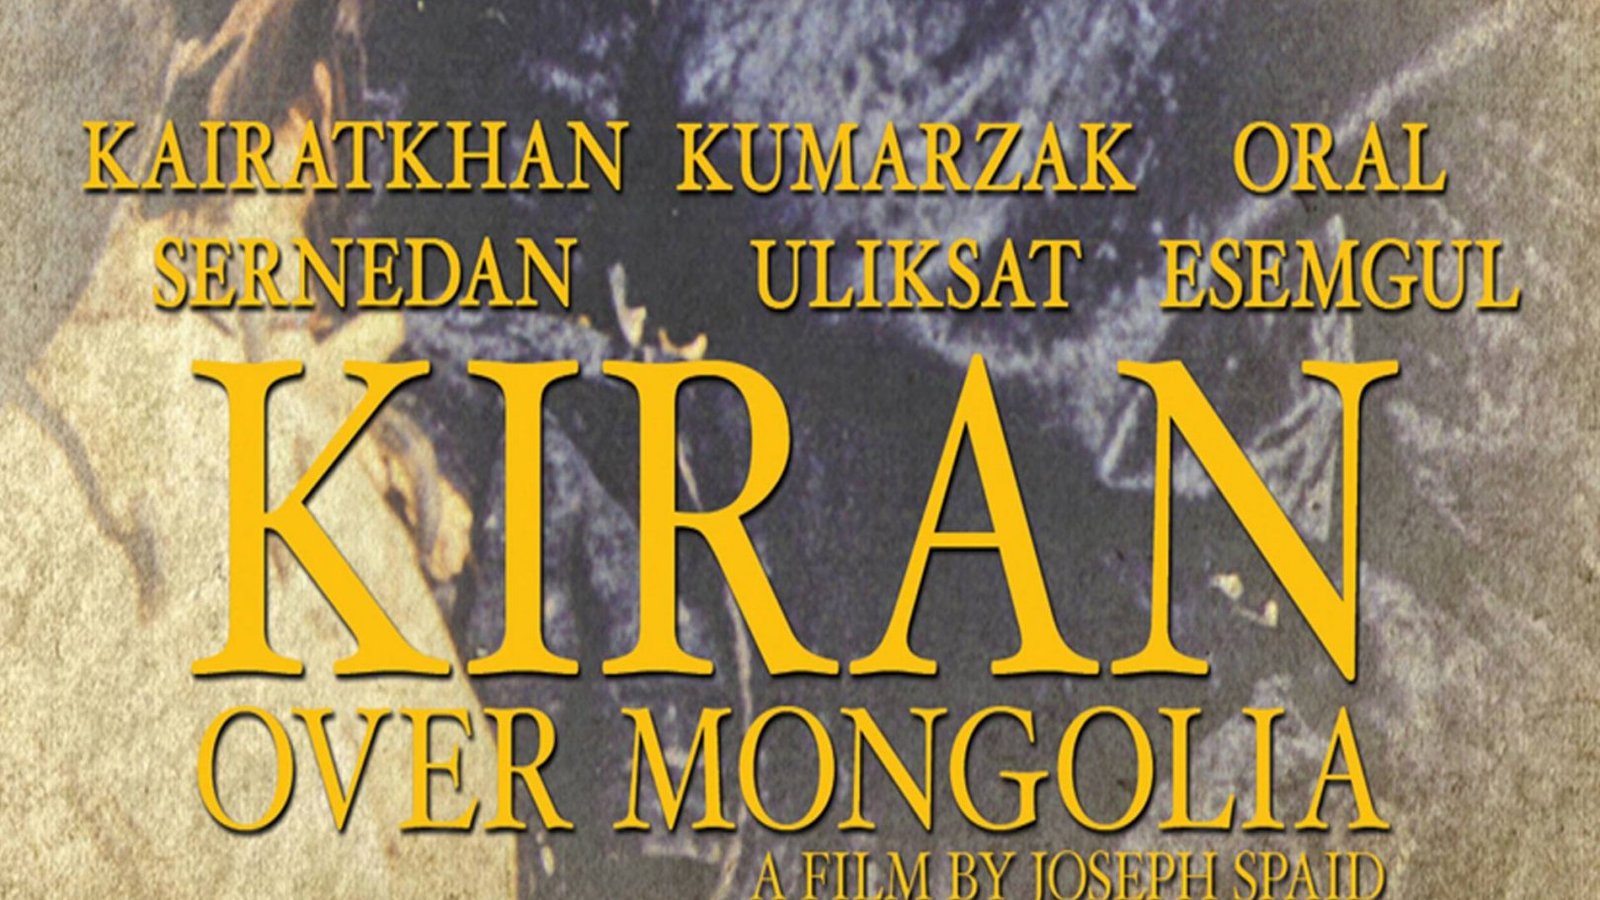 Kiran Over Mongolia - Becoming an Eagle Master